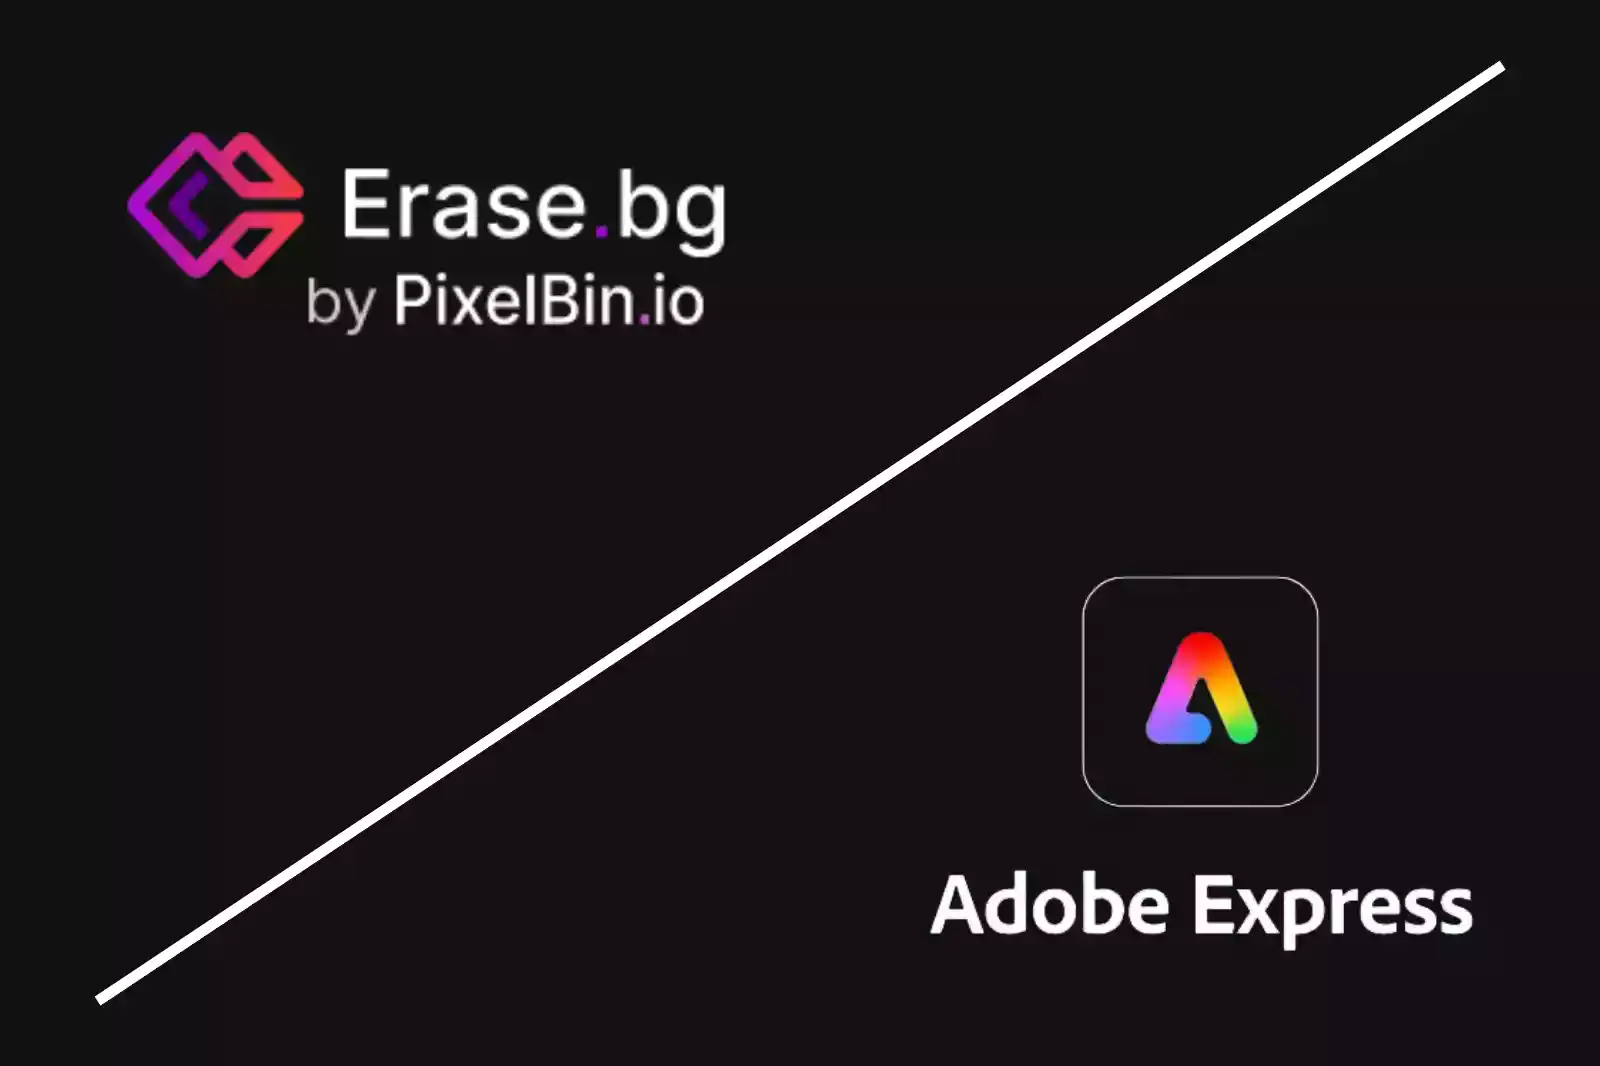 Erase.bg and Adobe Express Alternatives